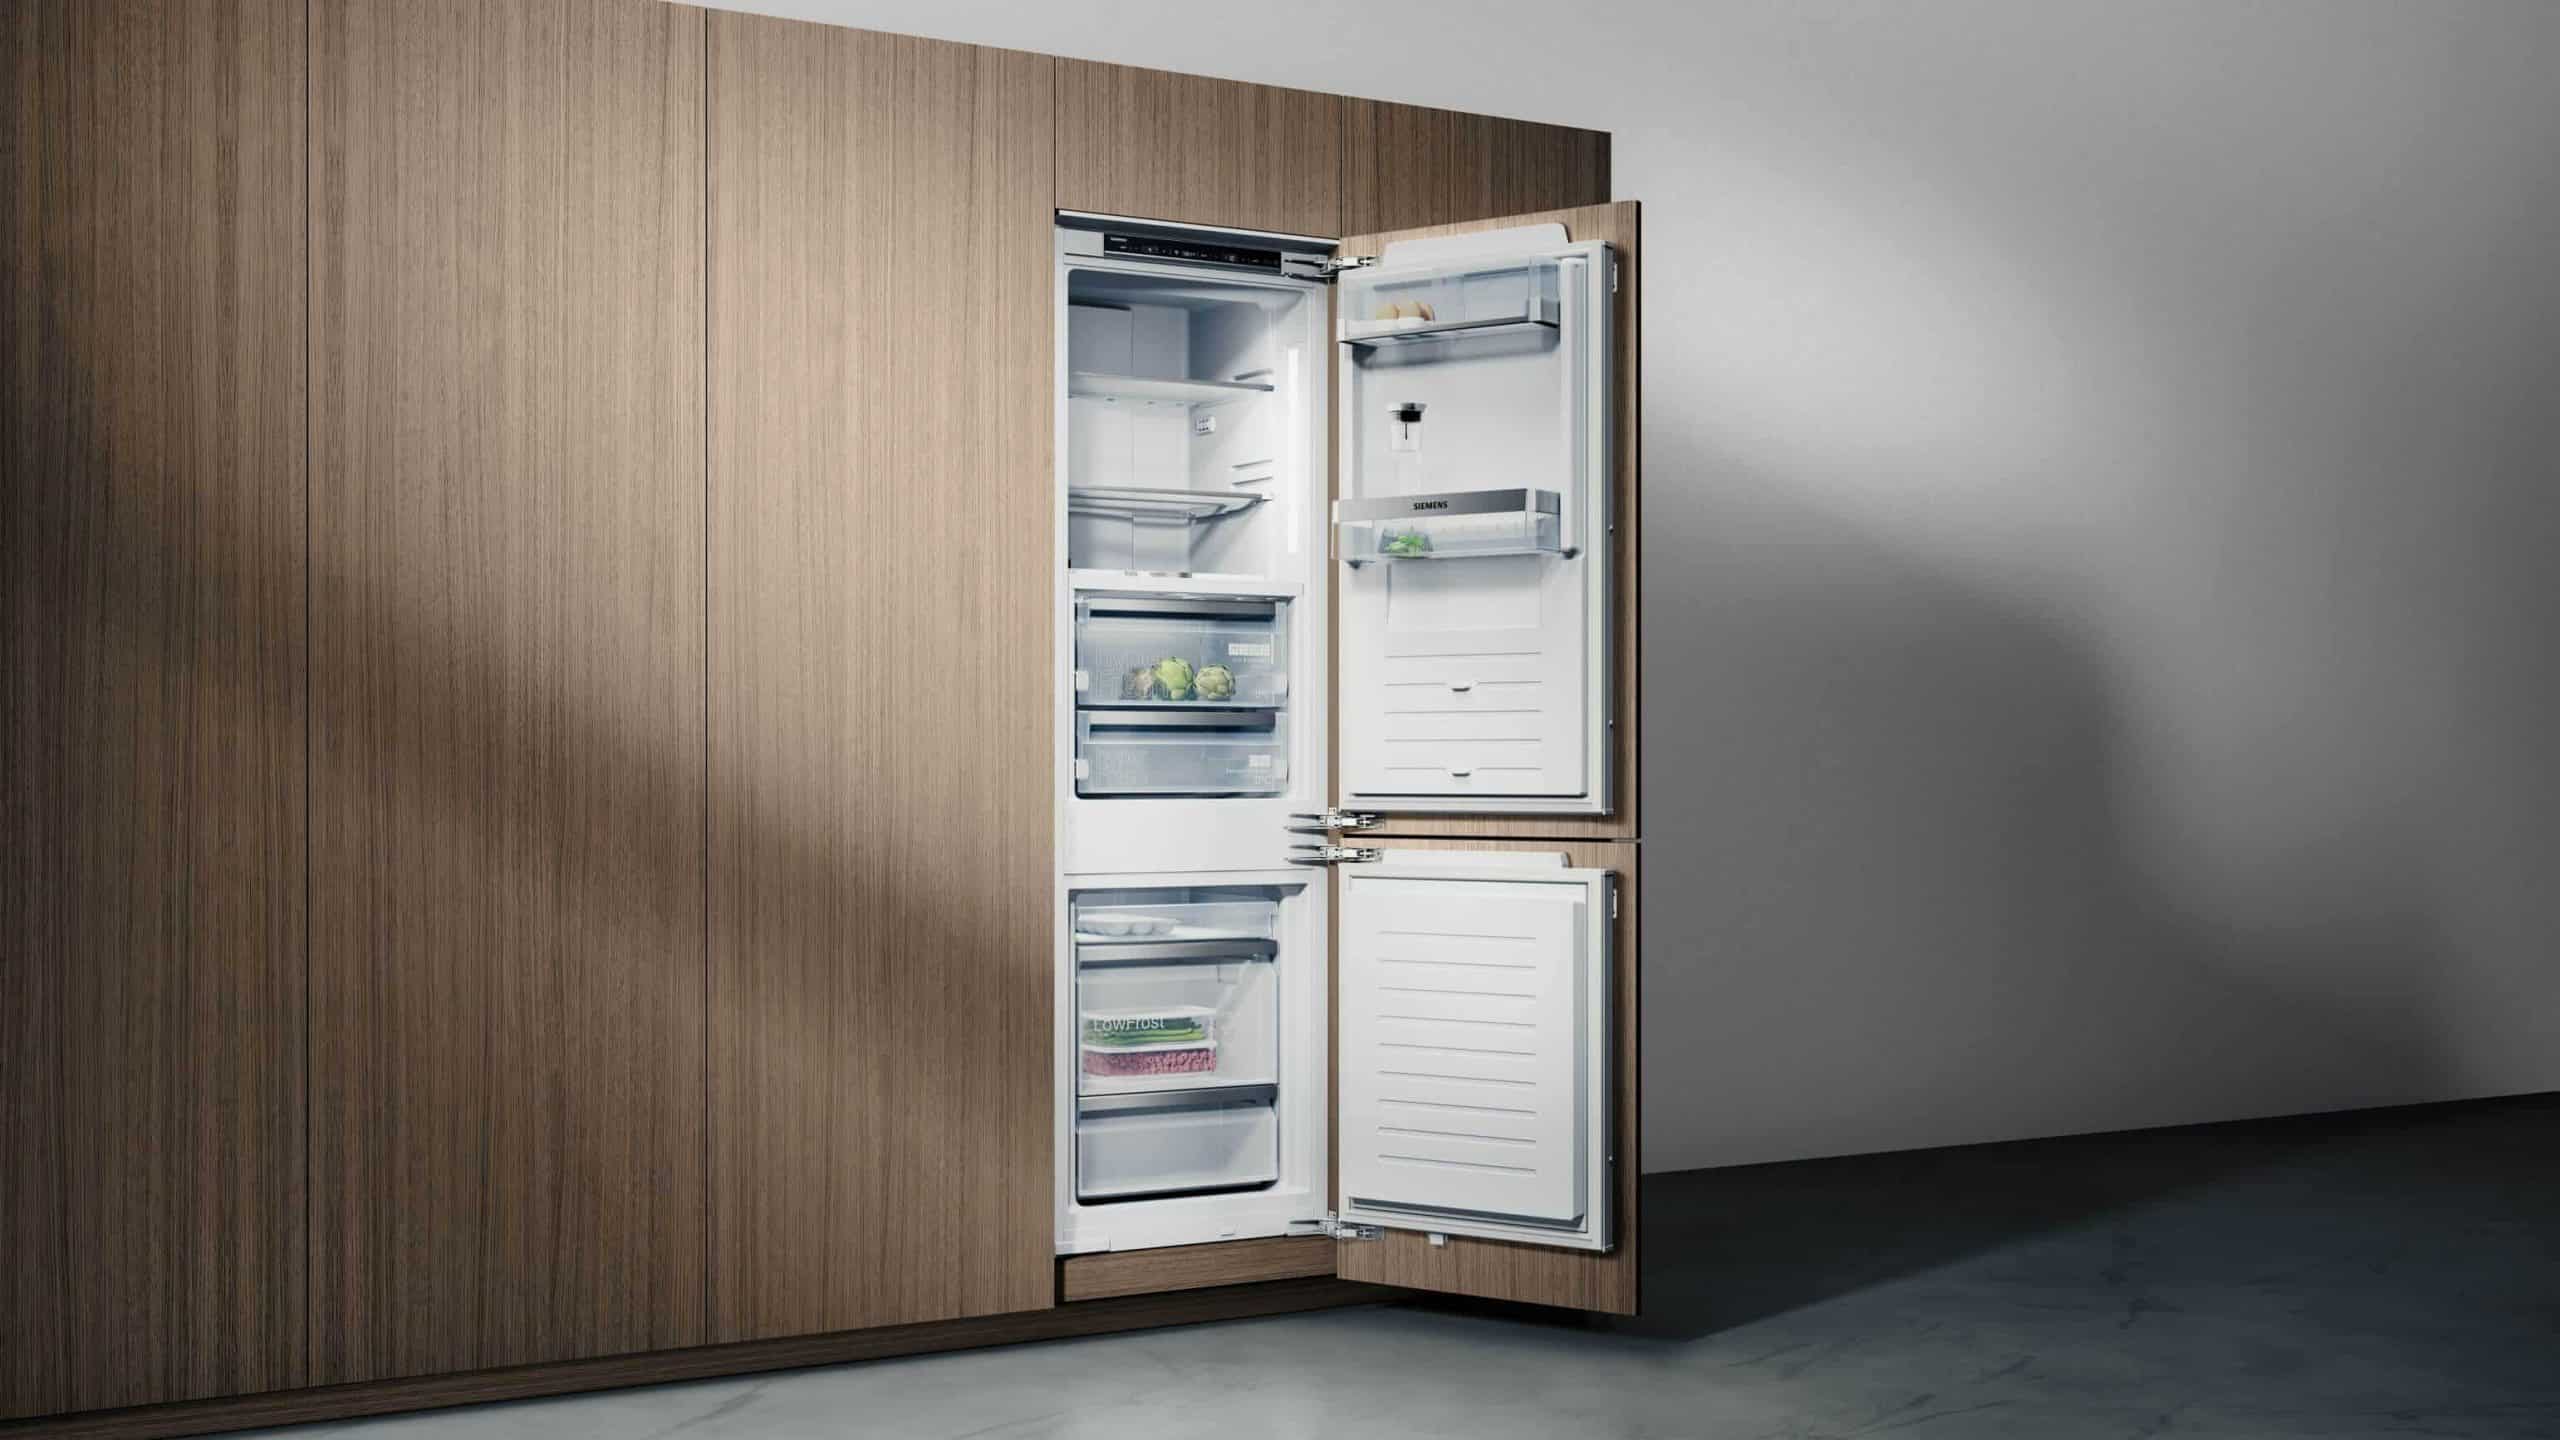 built-in bottom-freezer fridge flushed into brown cabinetry, built in appliances for kitchen, premium modern kitchen appliances